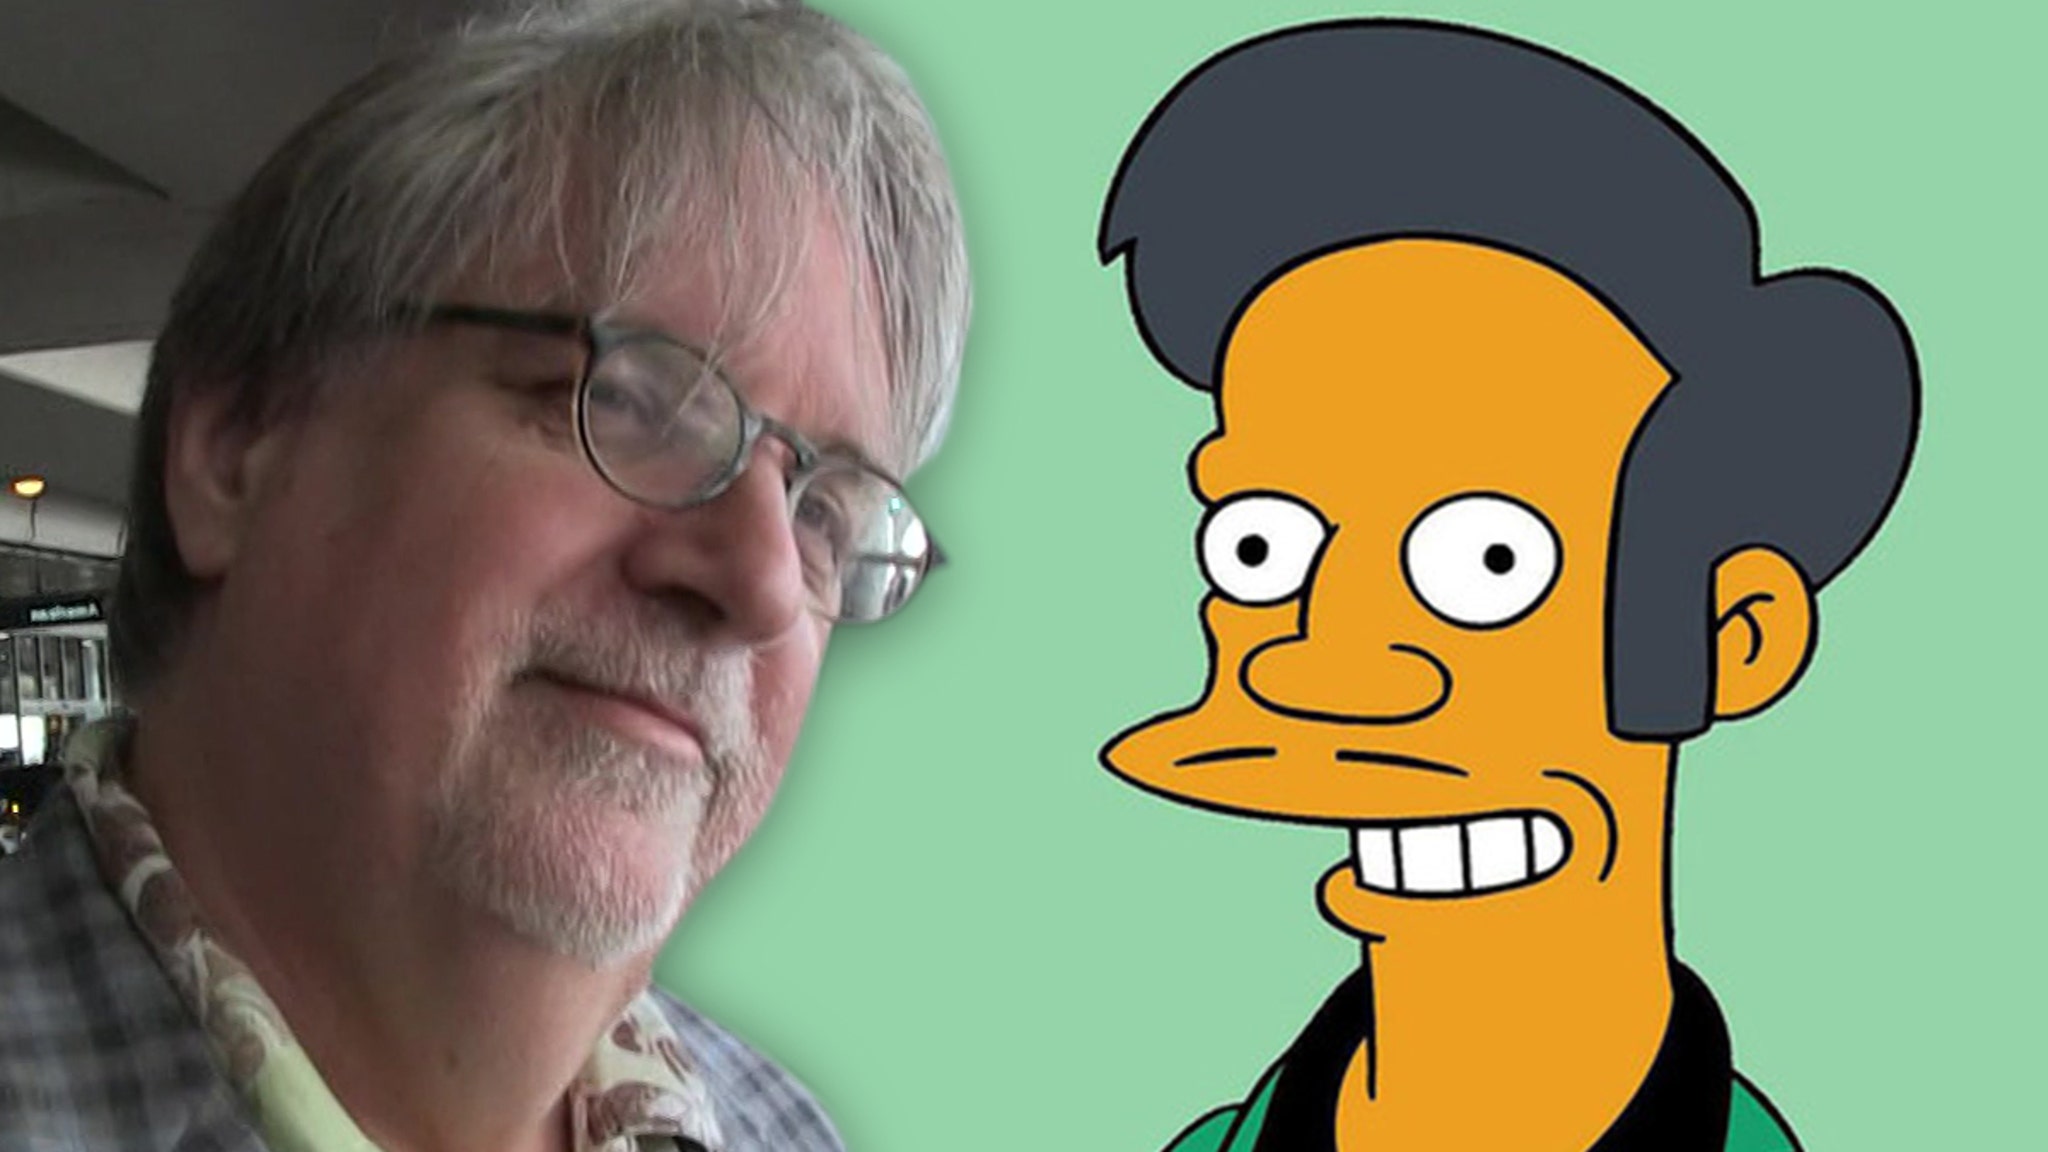 ‘Simpsons’ creator Matt Groening says he’s proud of Apu’s character